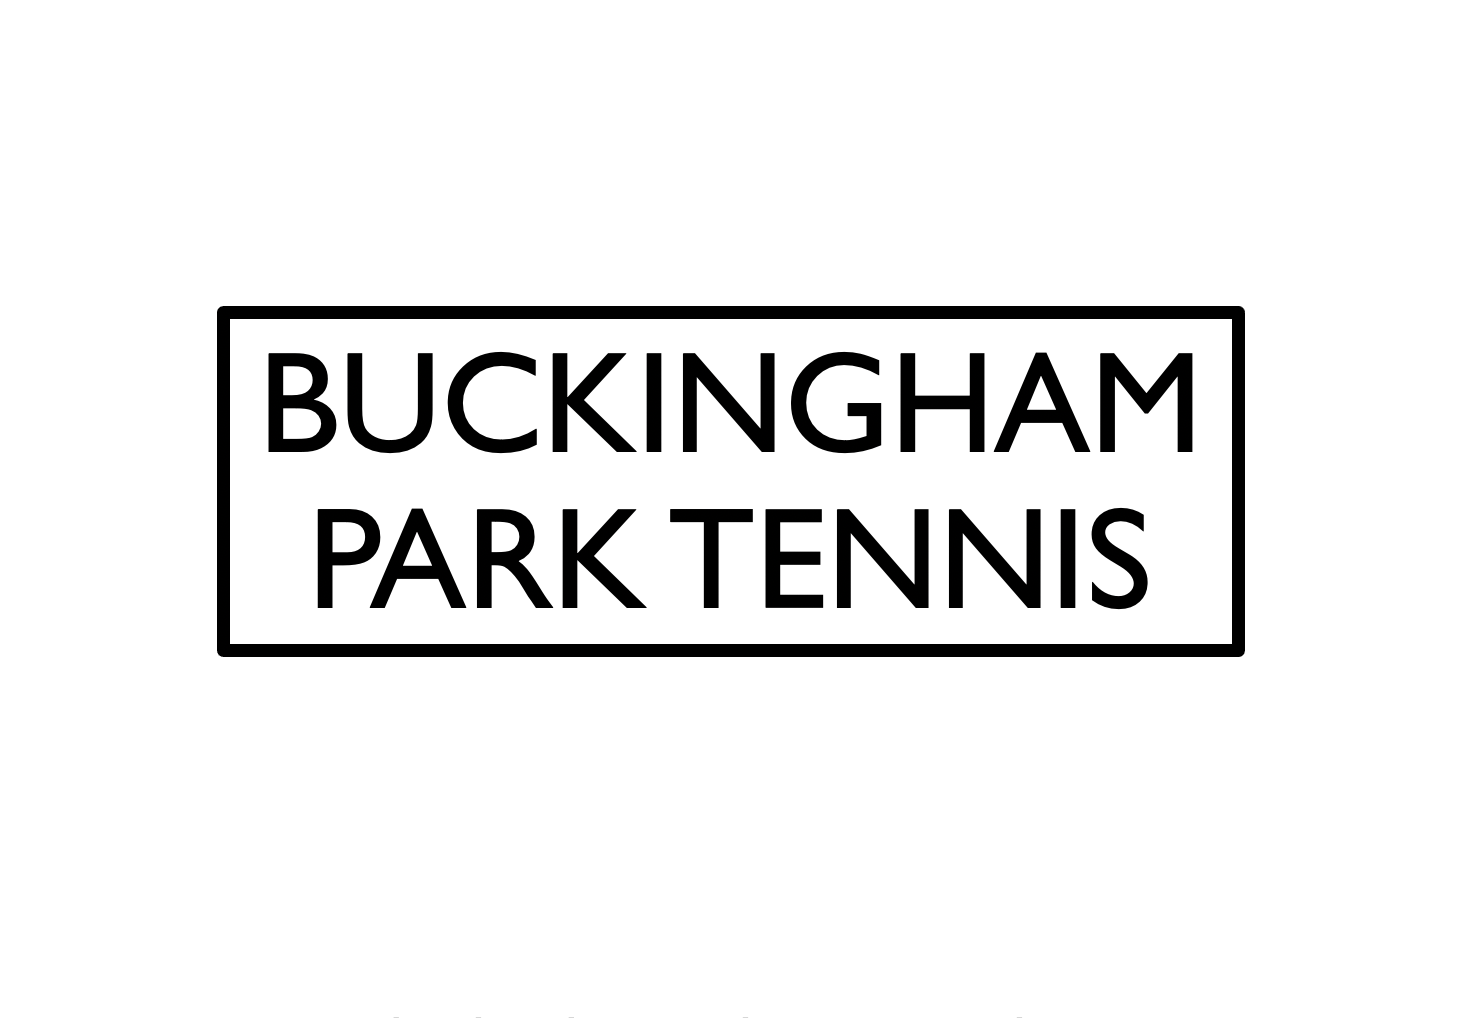 Buckingham Park Tennis